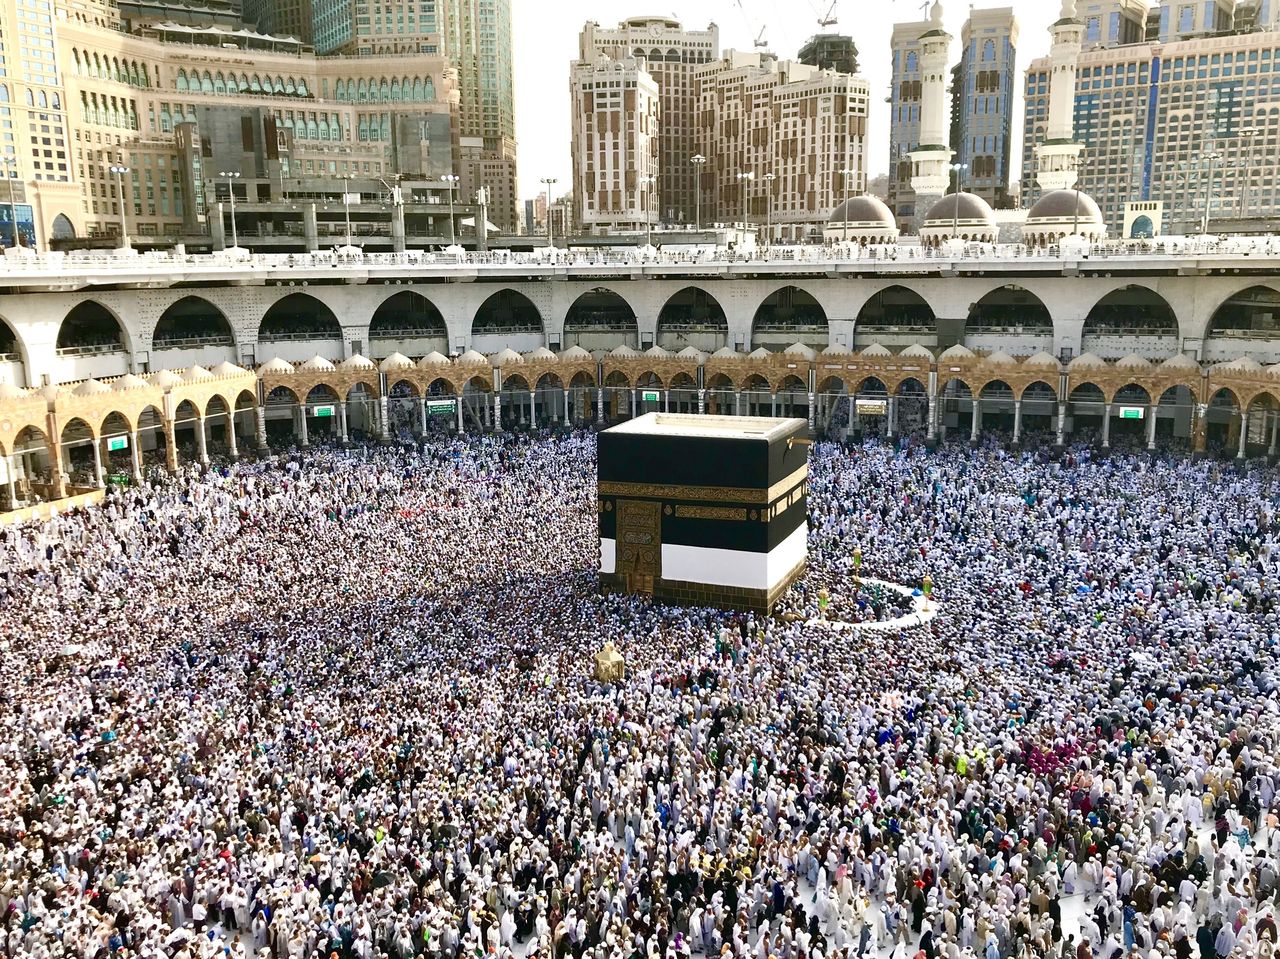 A pilgrimage to Mecca gathers hundreds of thousands of the faithful